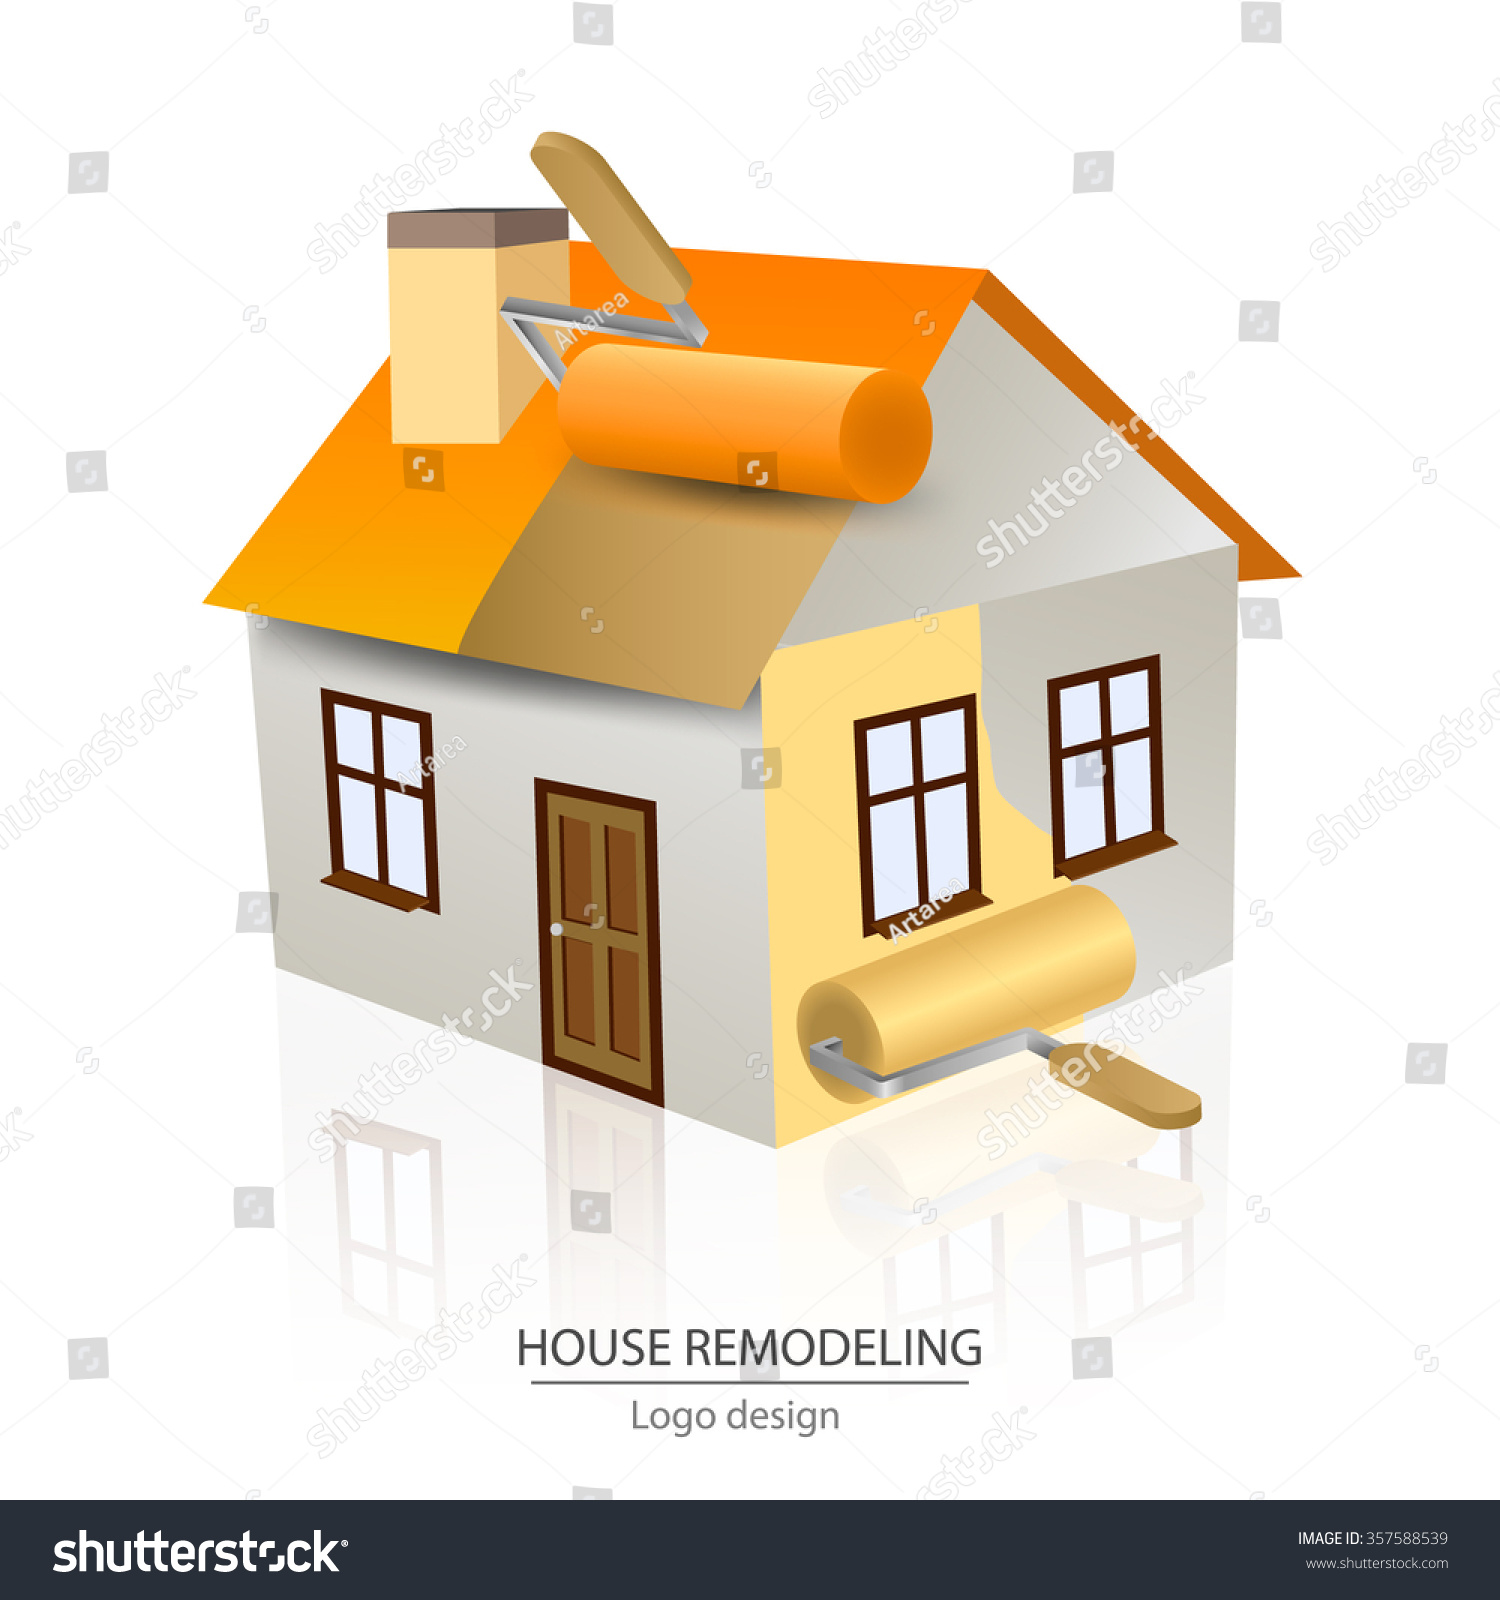 House Remodeling Logo Design Paint Roller Stock Vector 357588539 ...